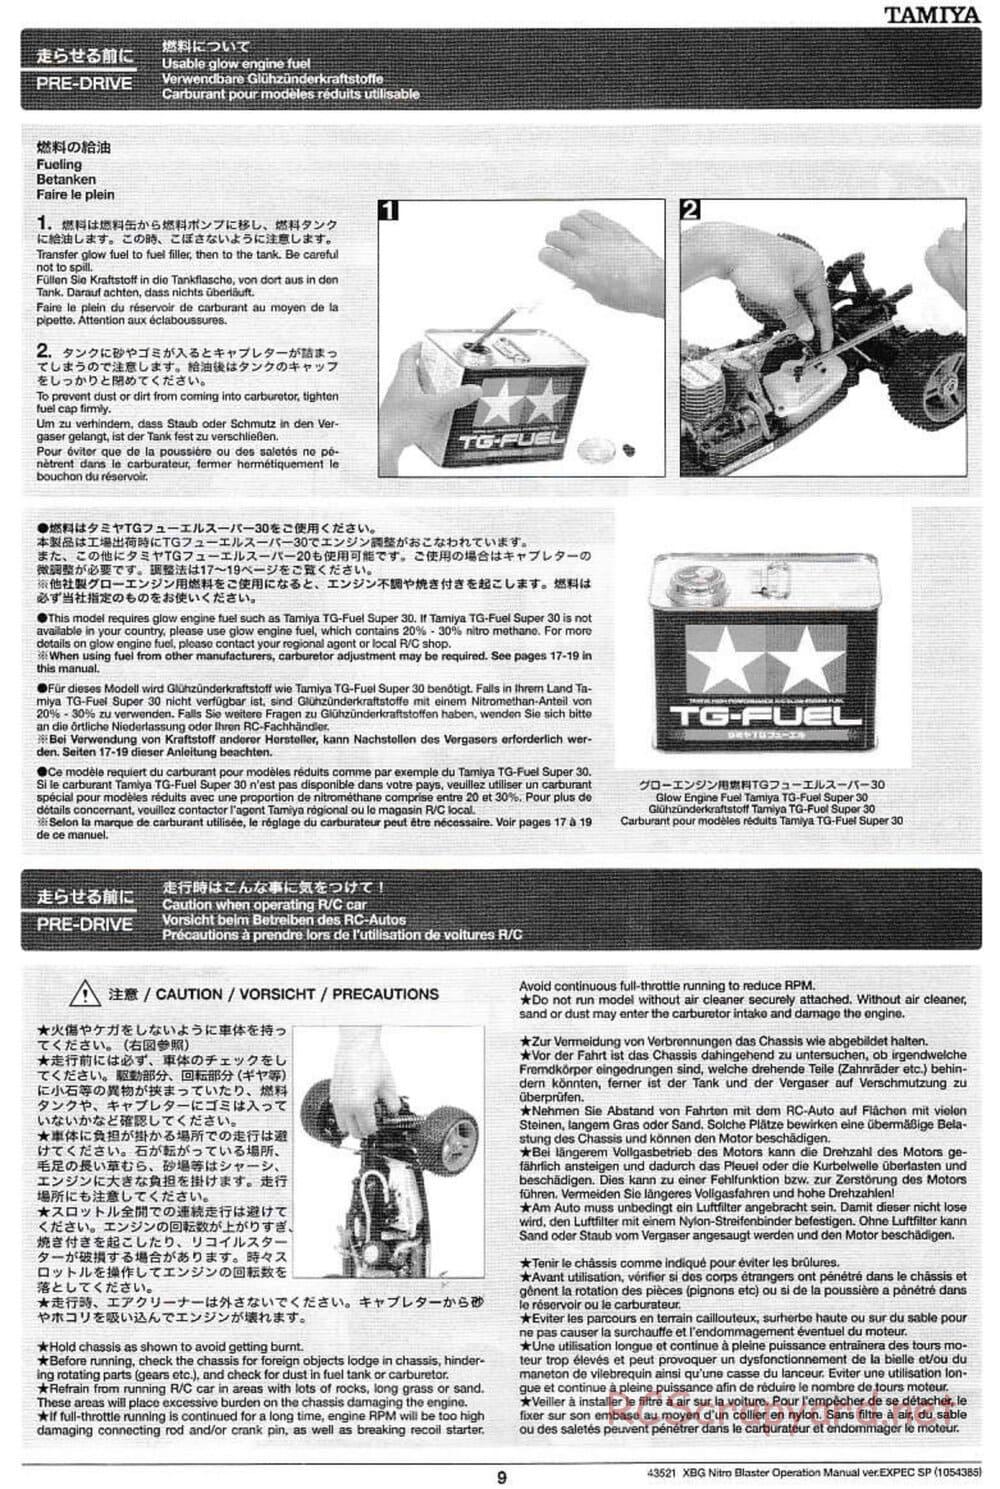 Tamiya - Nitro Blaster - NDF-01 - Operating Manual - Page 9